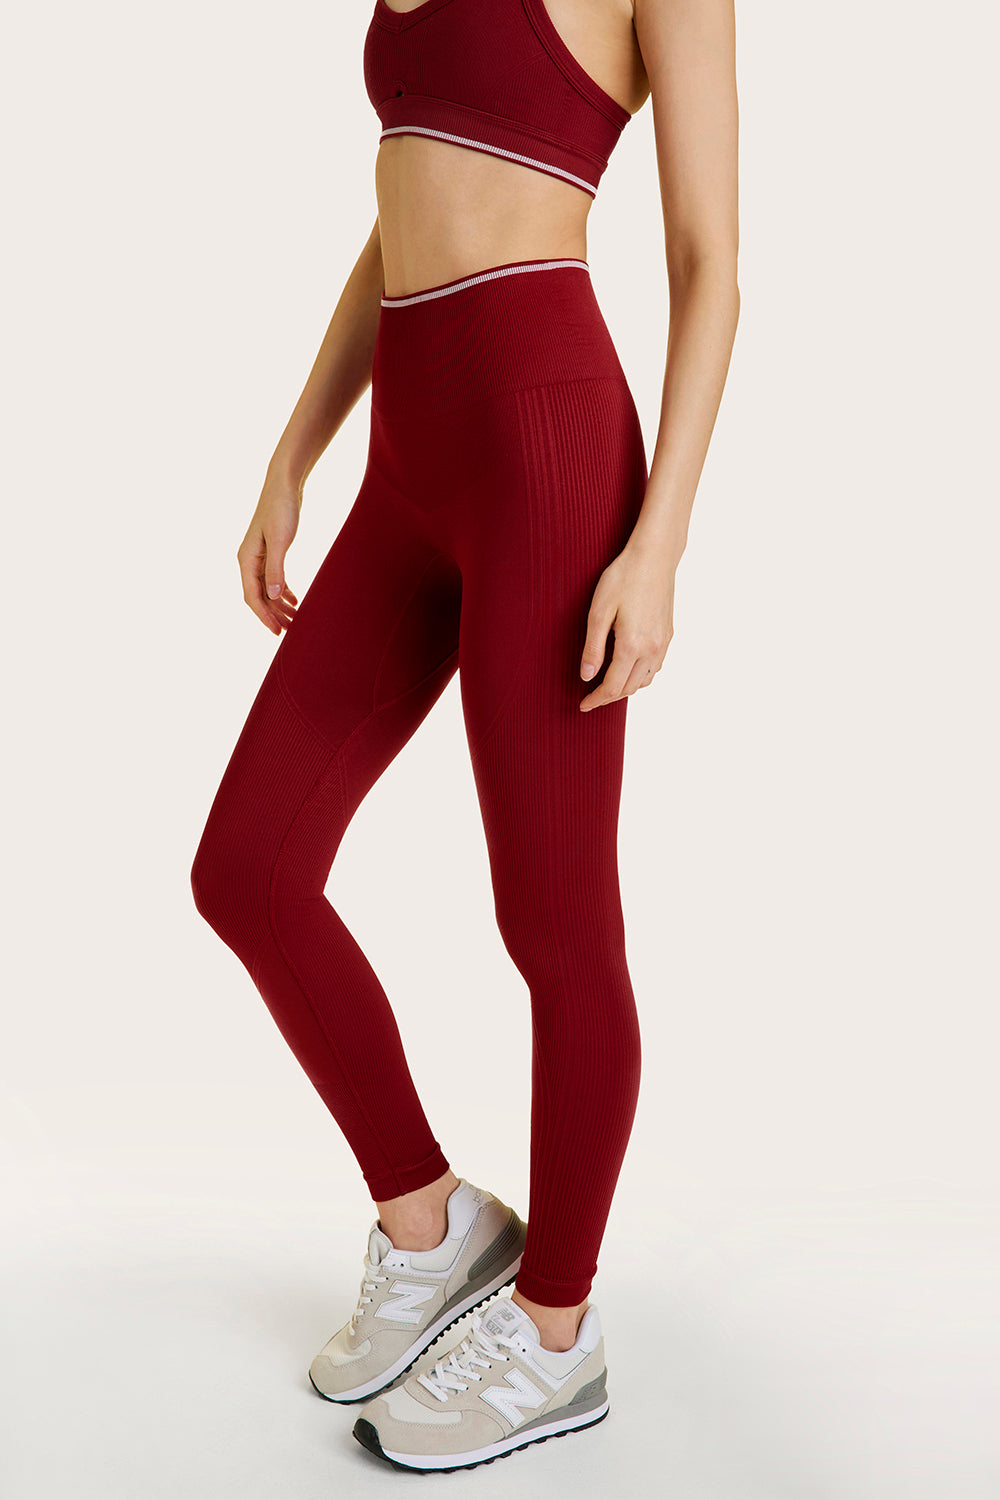 Alala women's seamless leggings in dark red